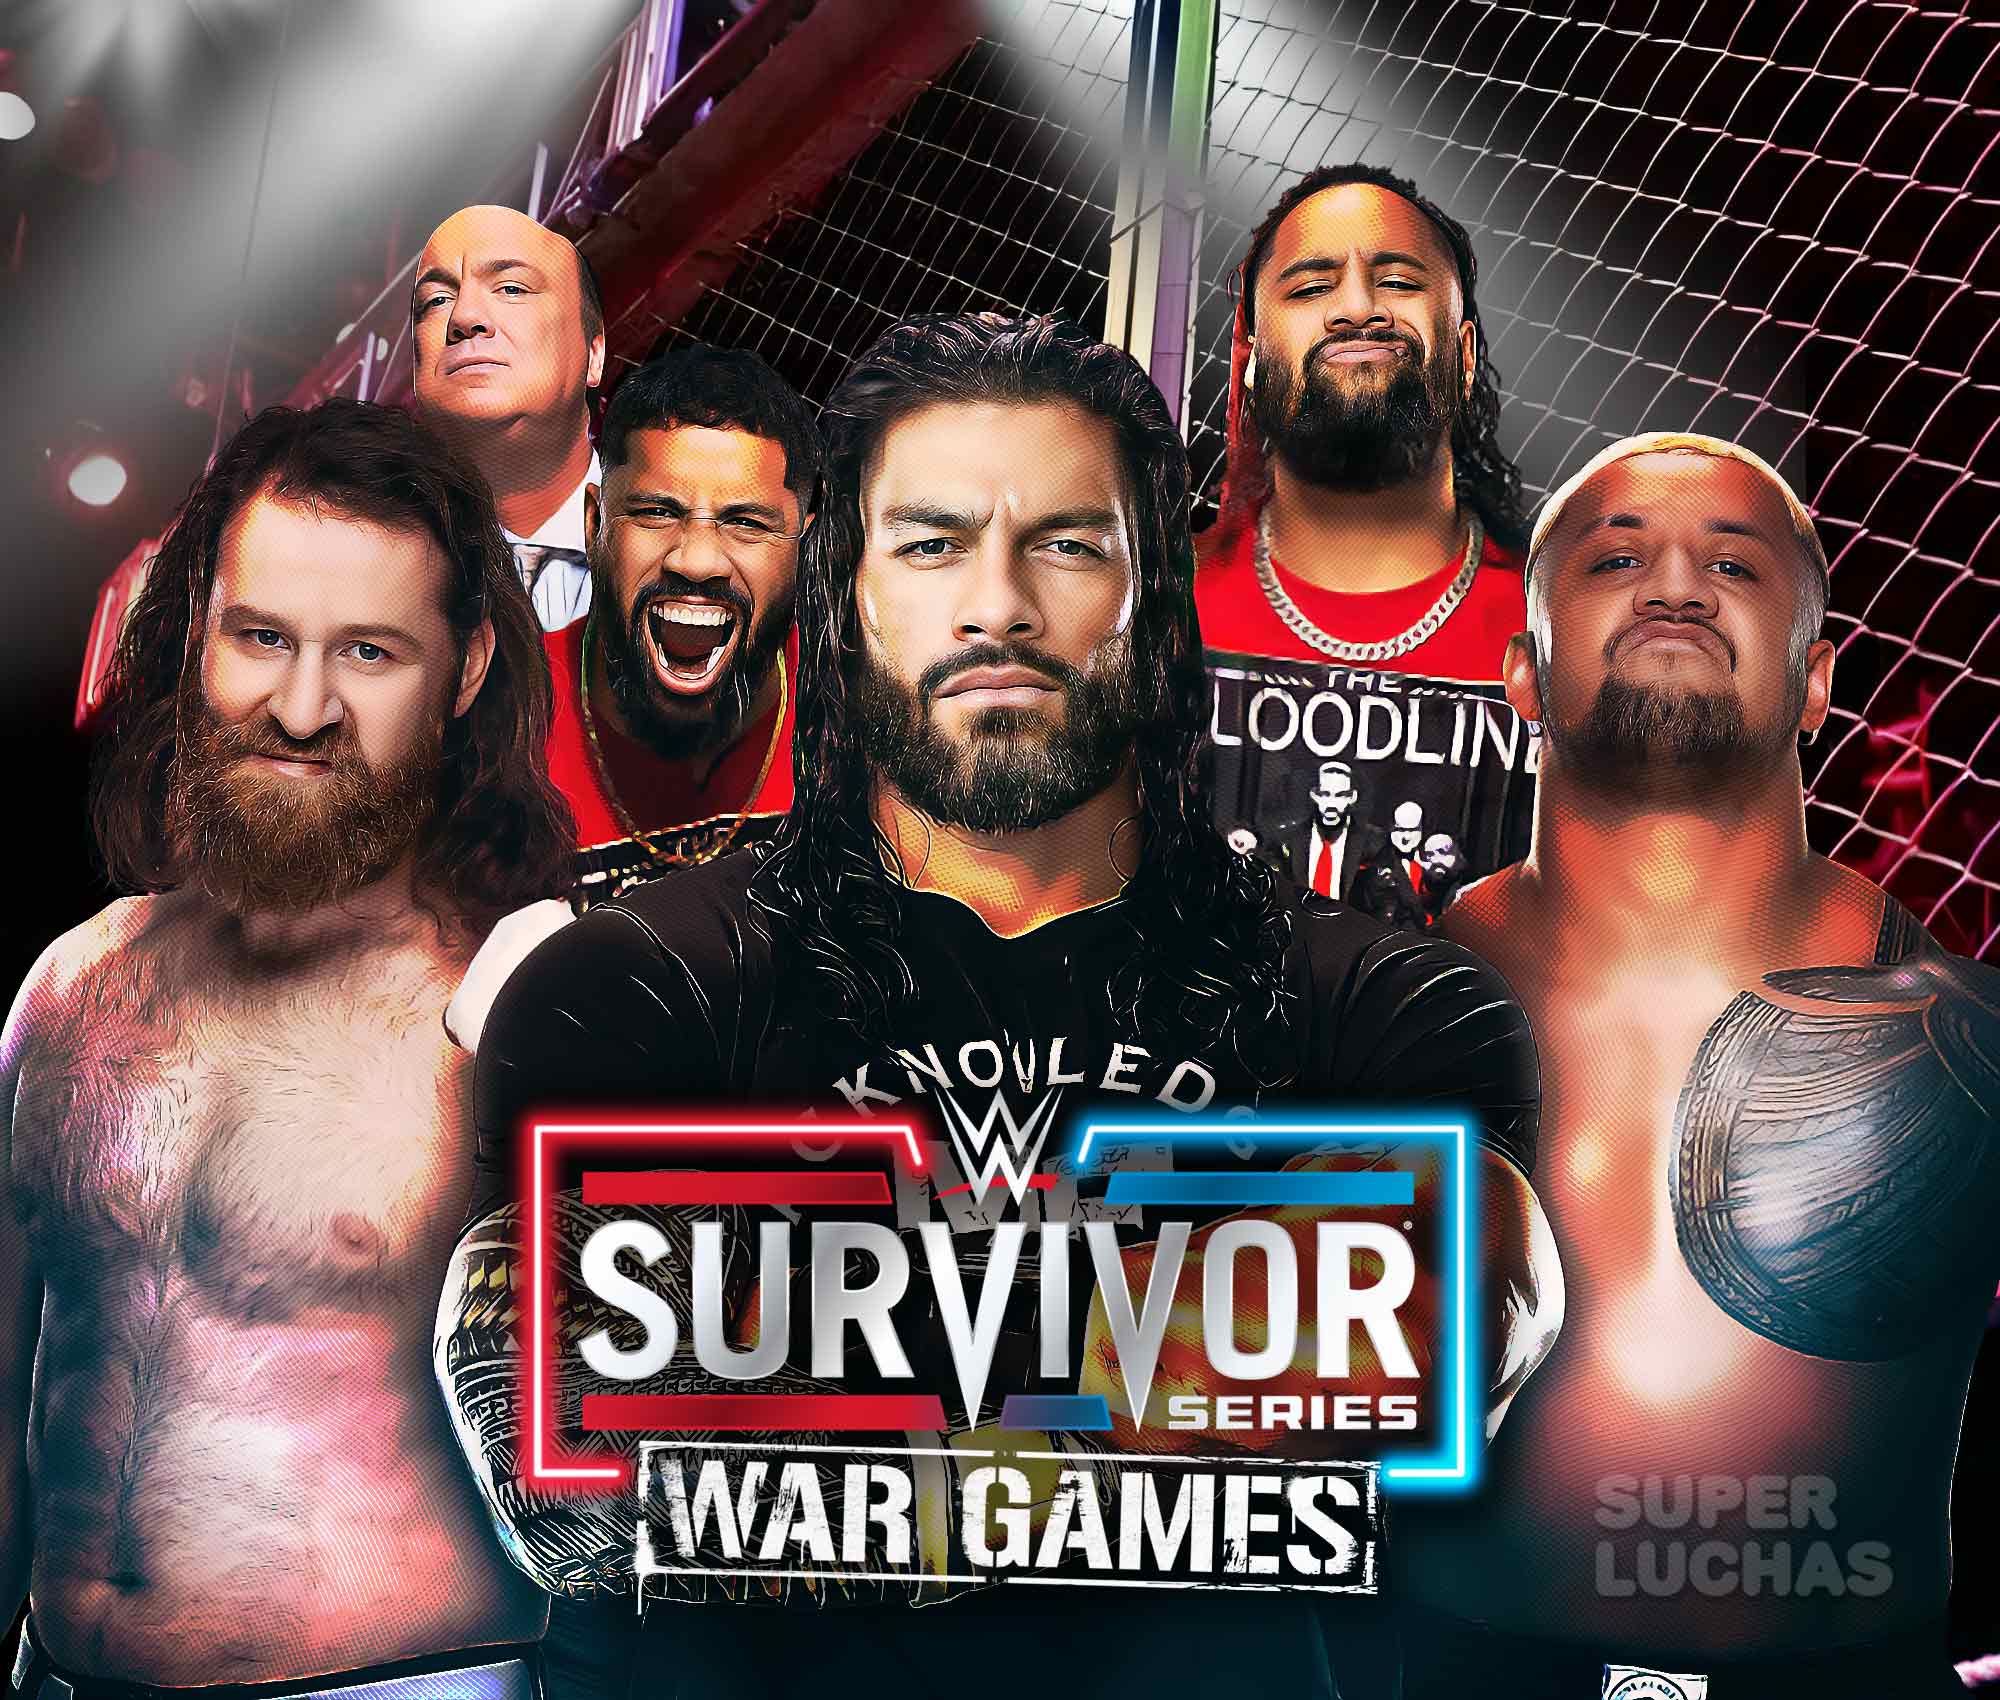 WWE SURVIVOR SERIES WARGAMES live results